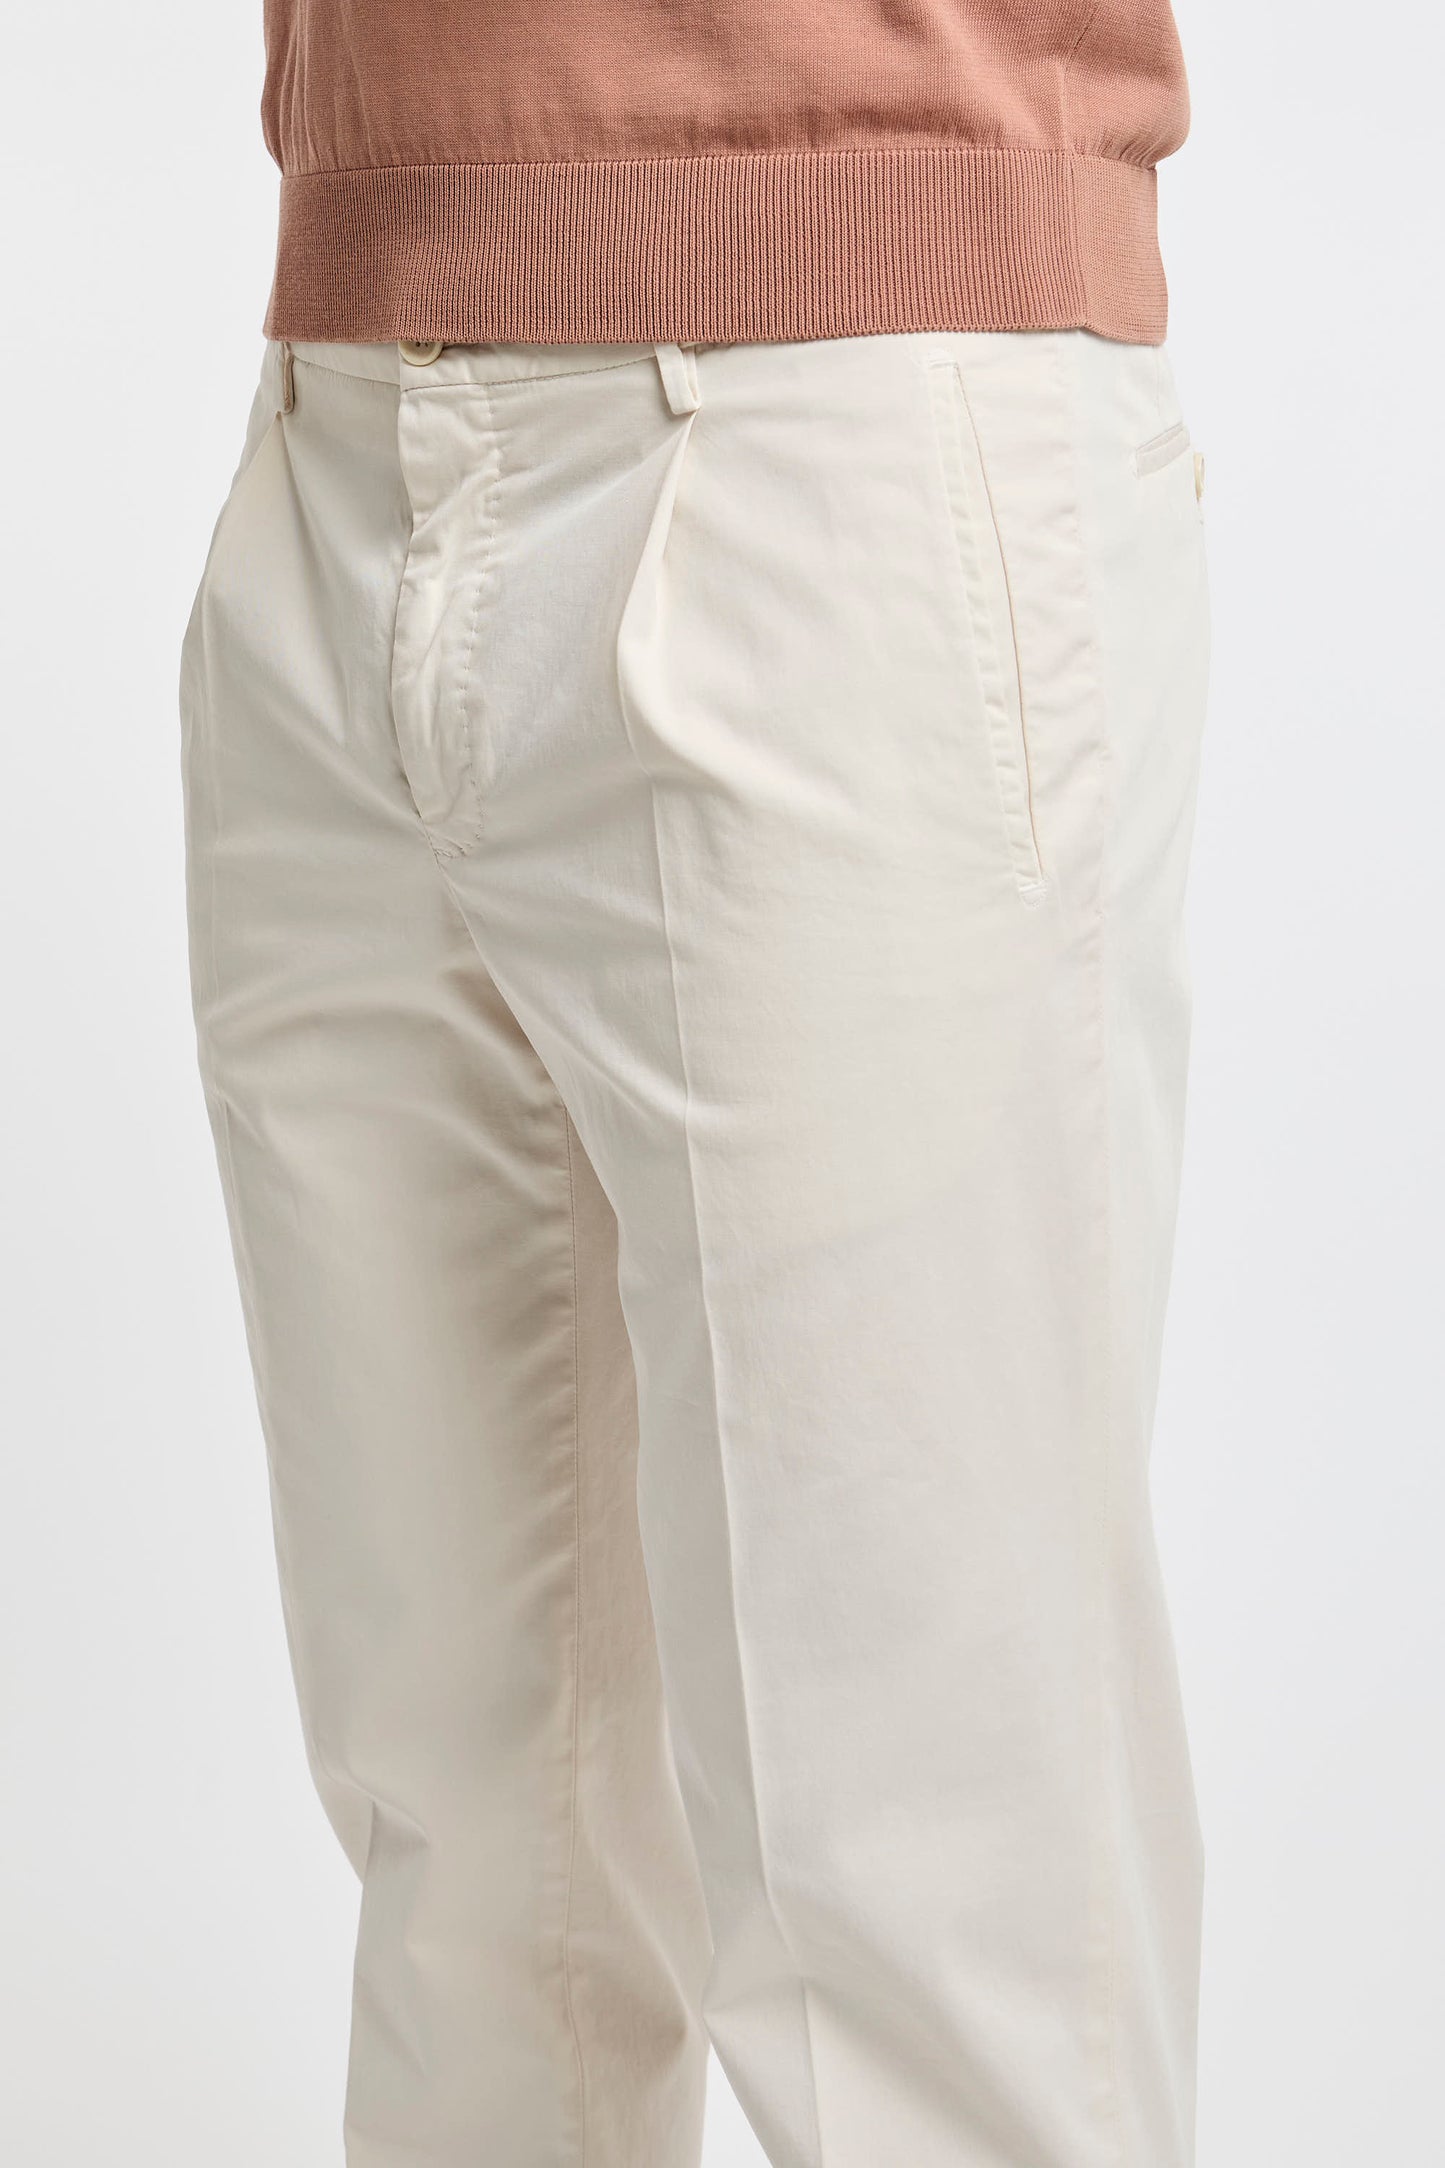  Incotex Pantalone Multicolor 97% Co 3% Ea Beige Uomo - 6